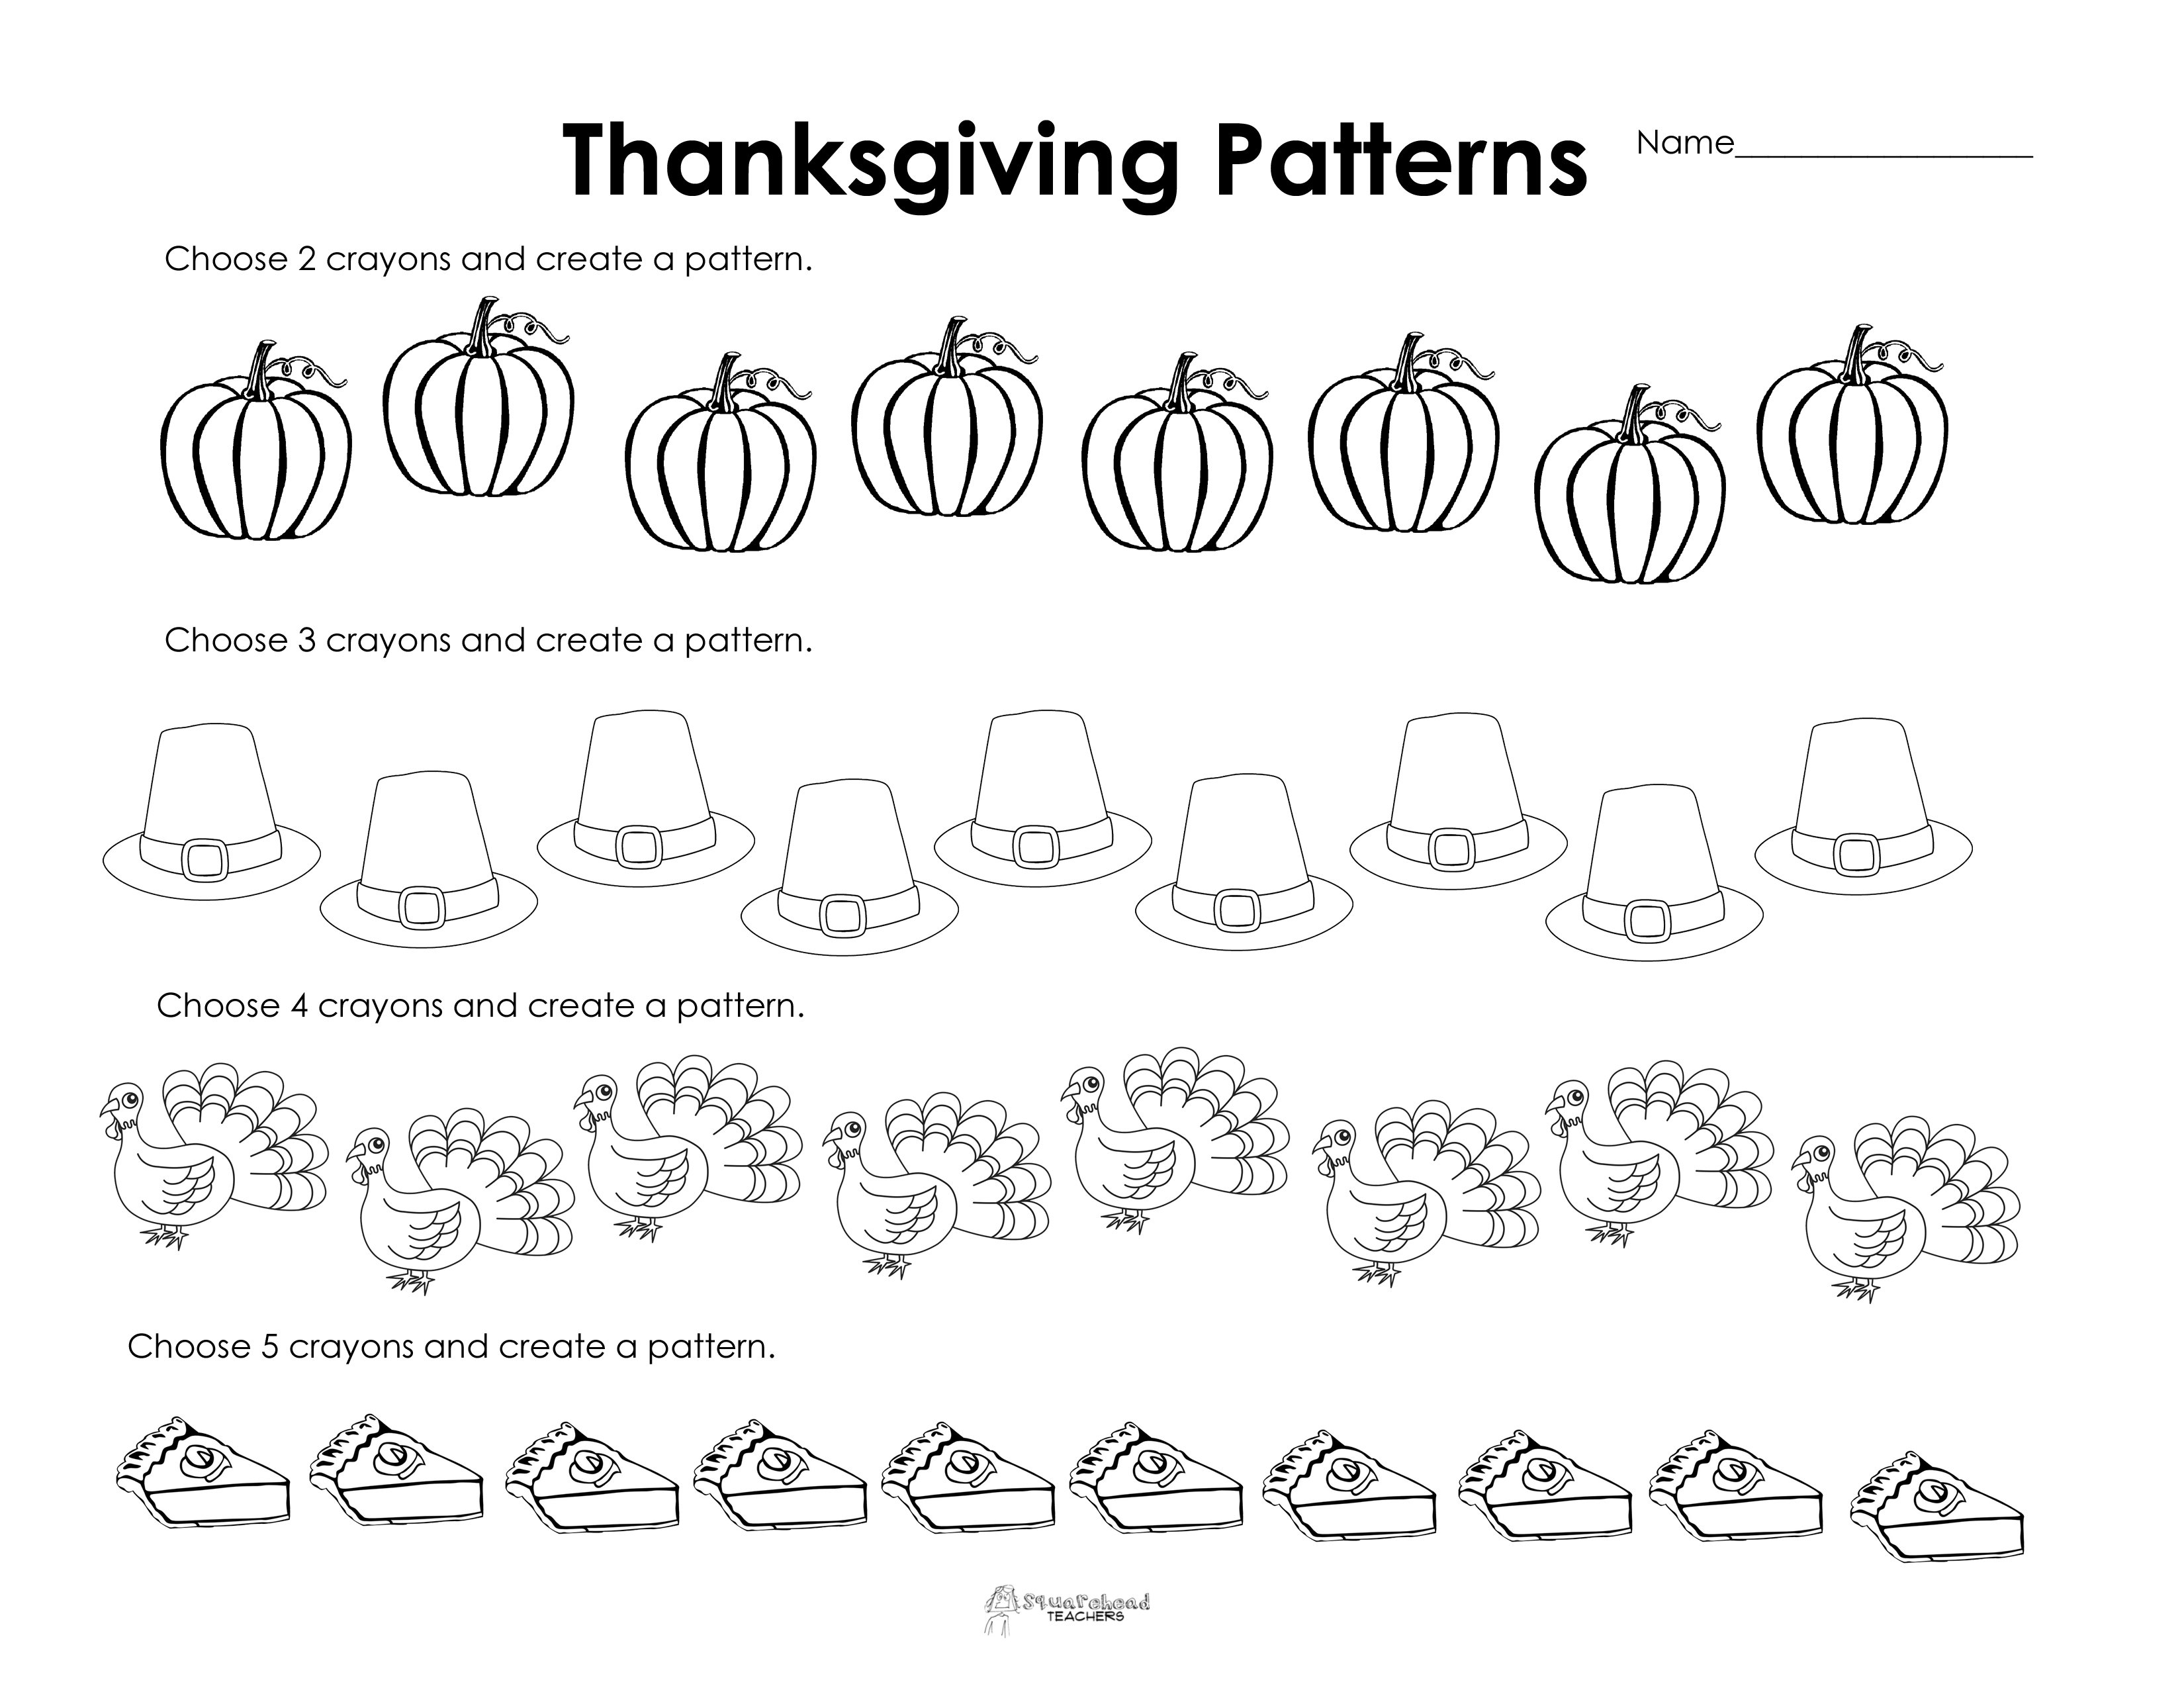 Making Patterns Thanksgiving Style Free Worksheet  Squarehead With Thanksgiving Worksheets For Kindergarten Free